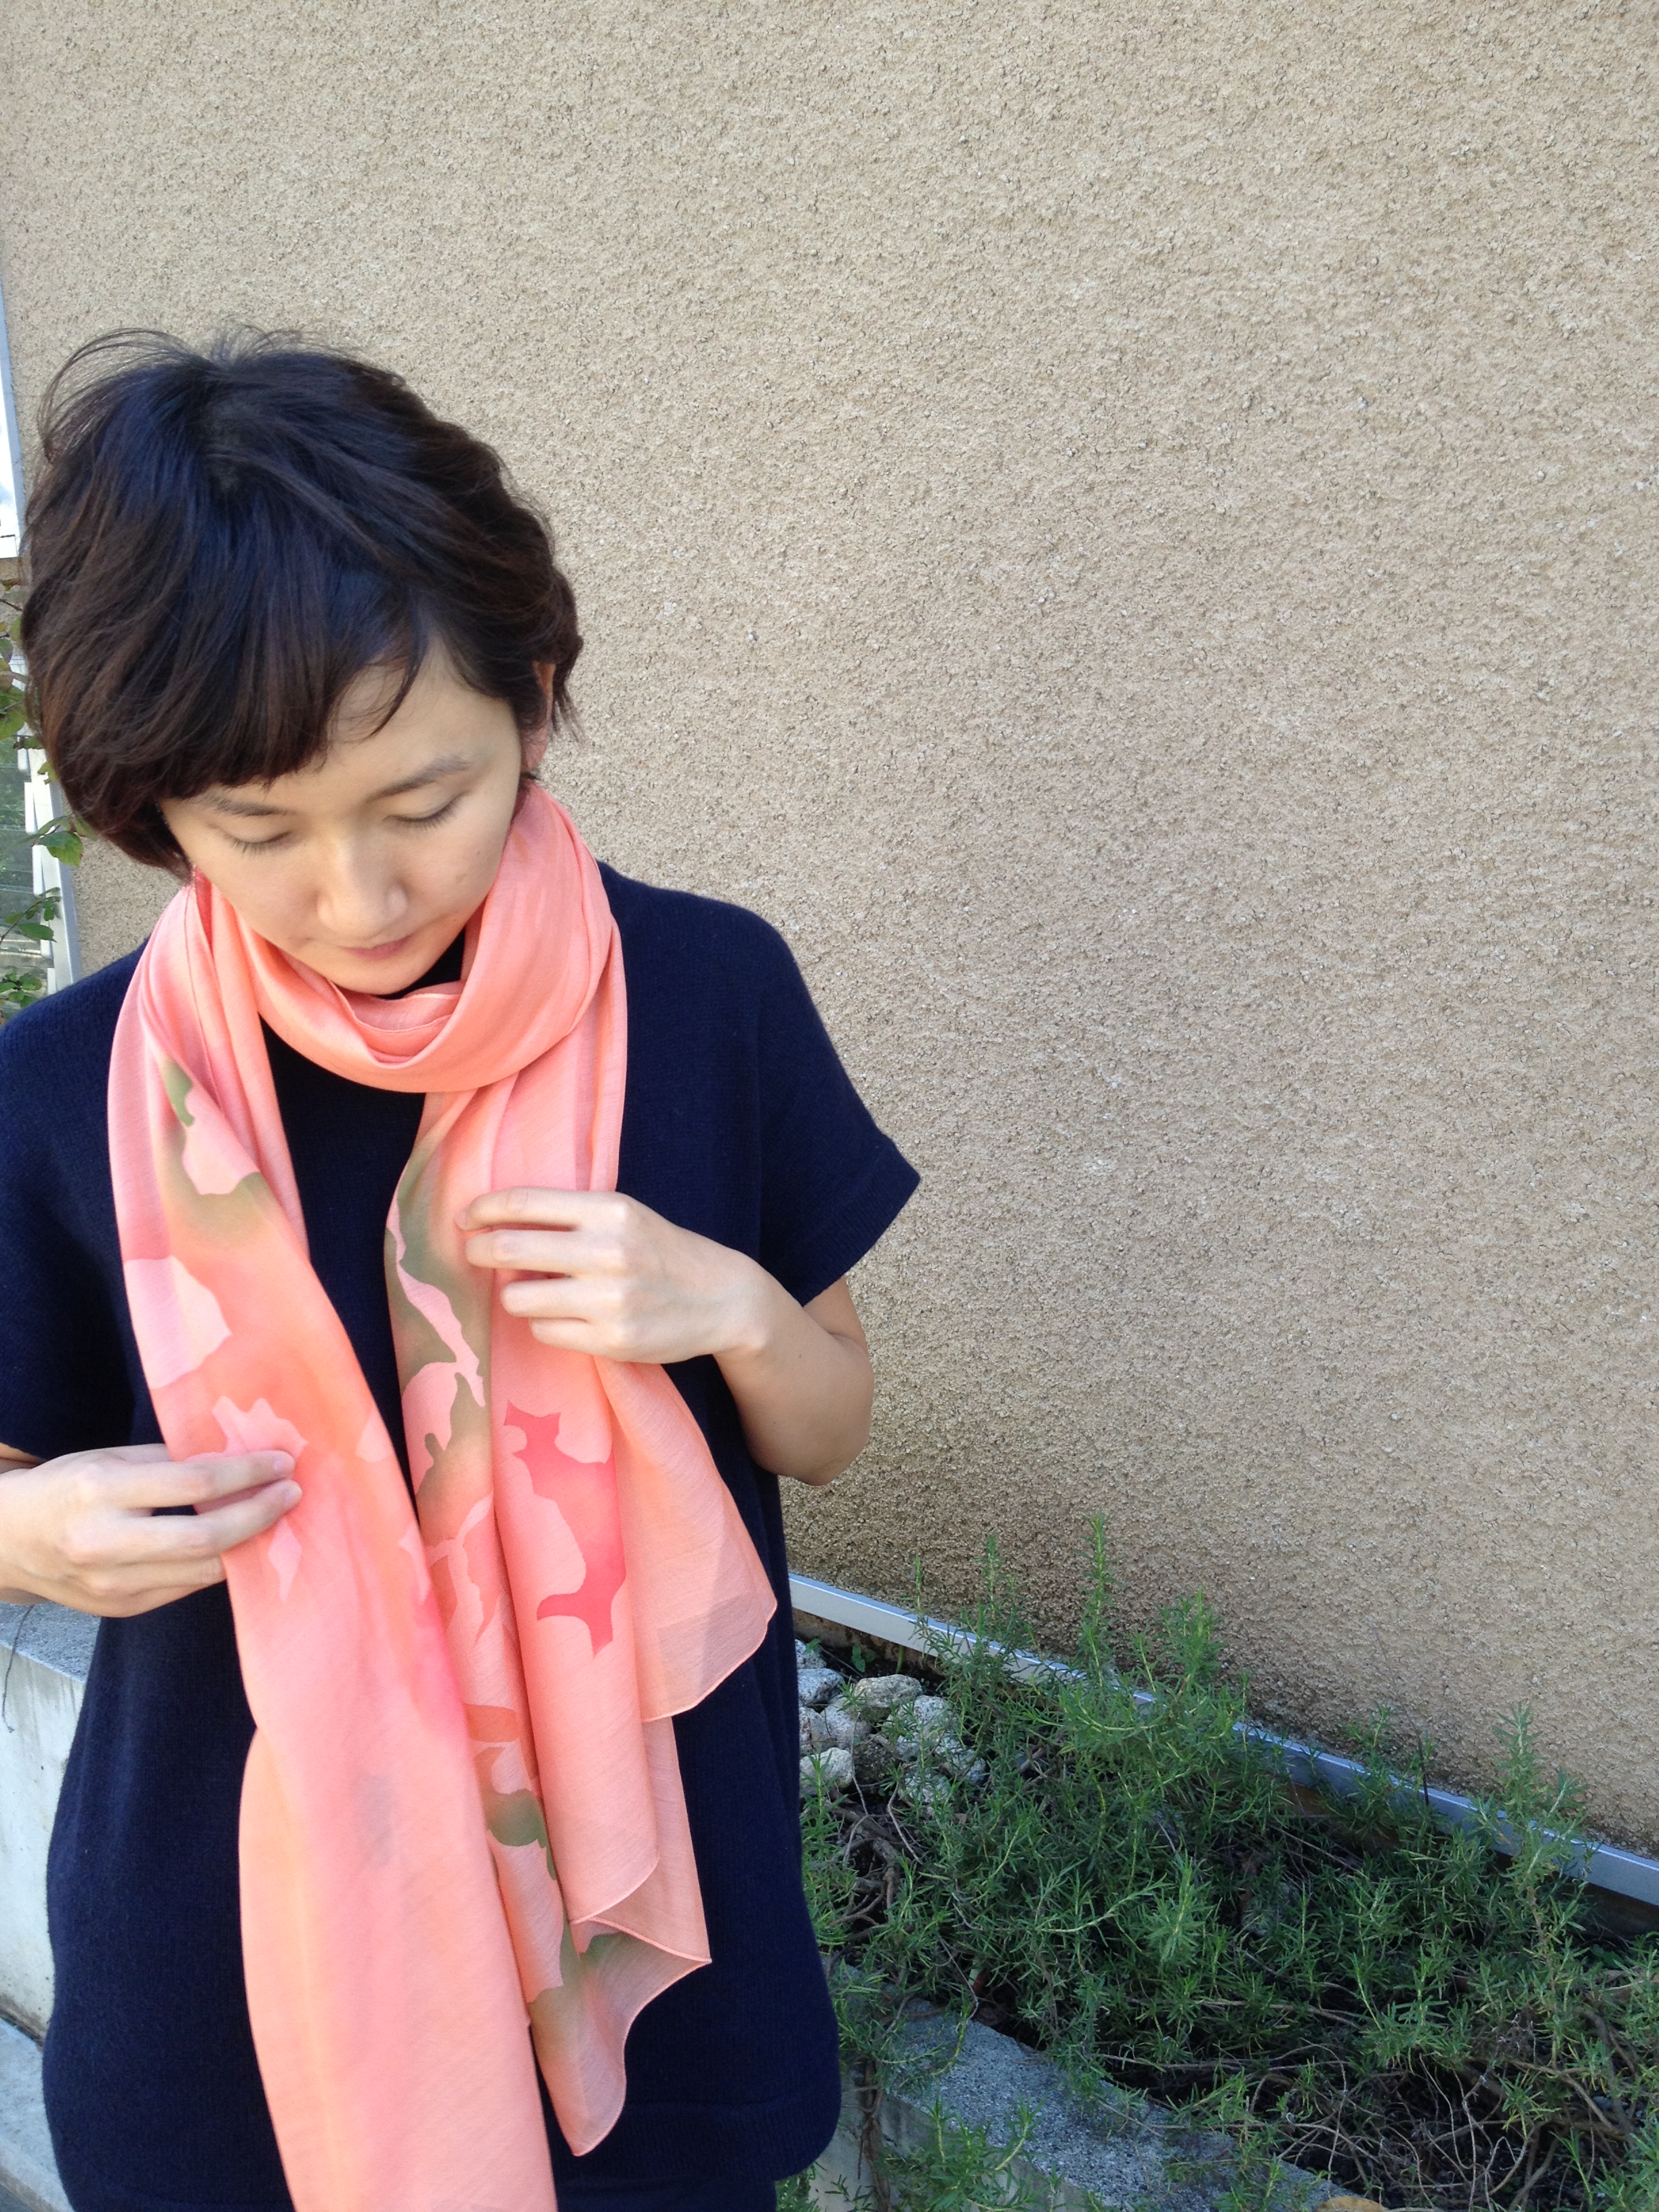 Hand dyed silk scarf